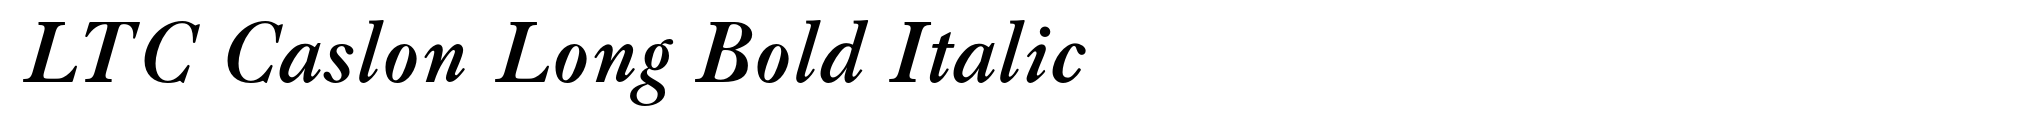 LTC Caslon Long Bold Italic image